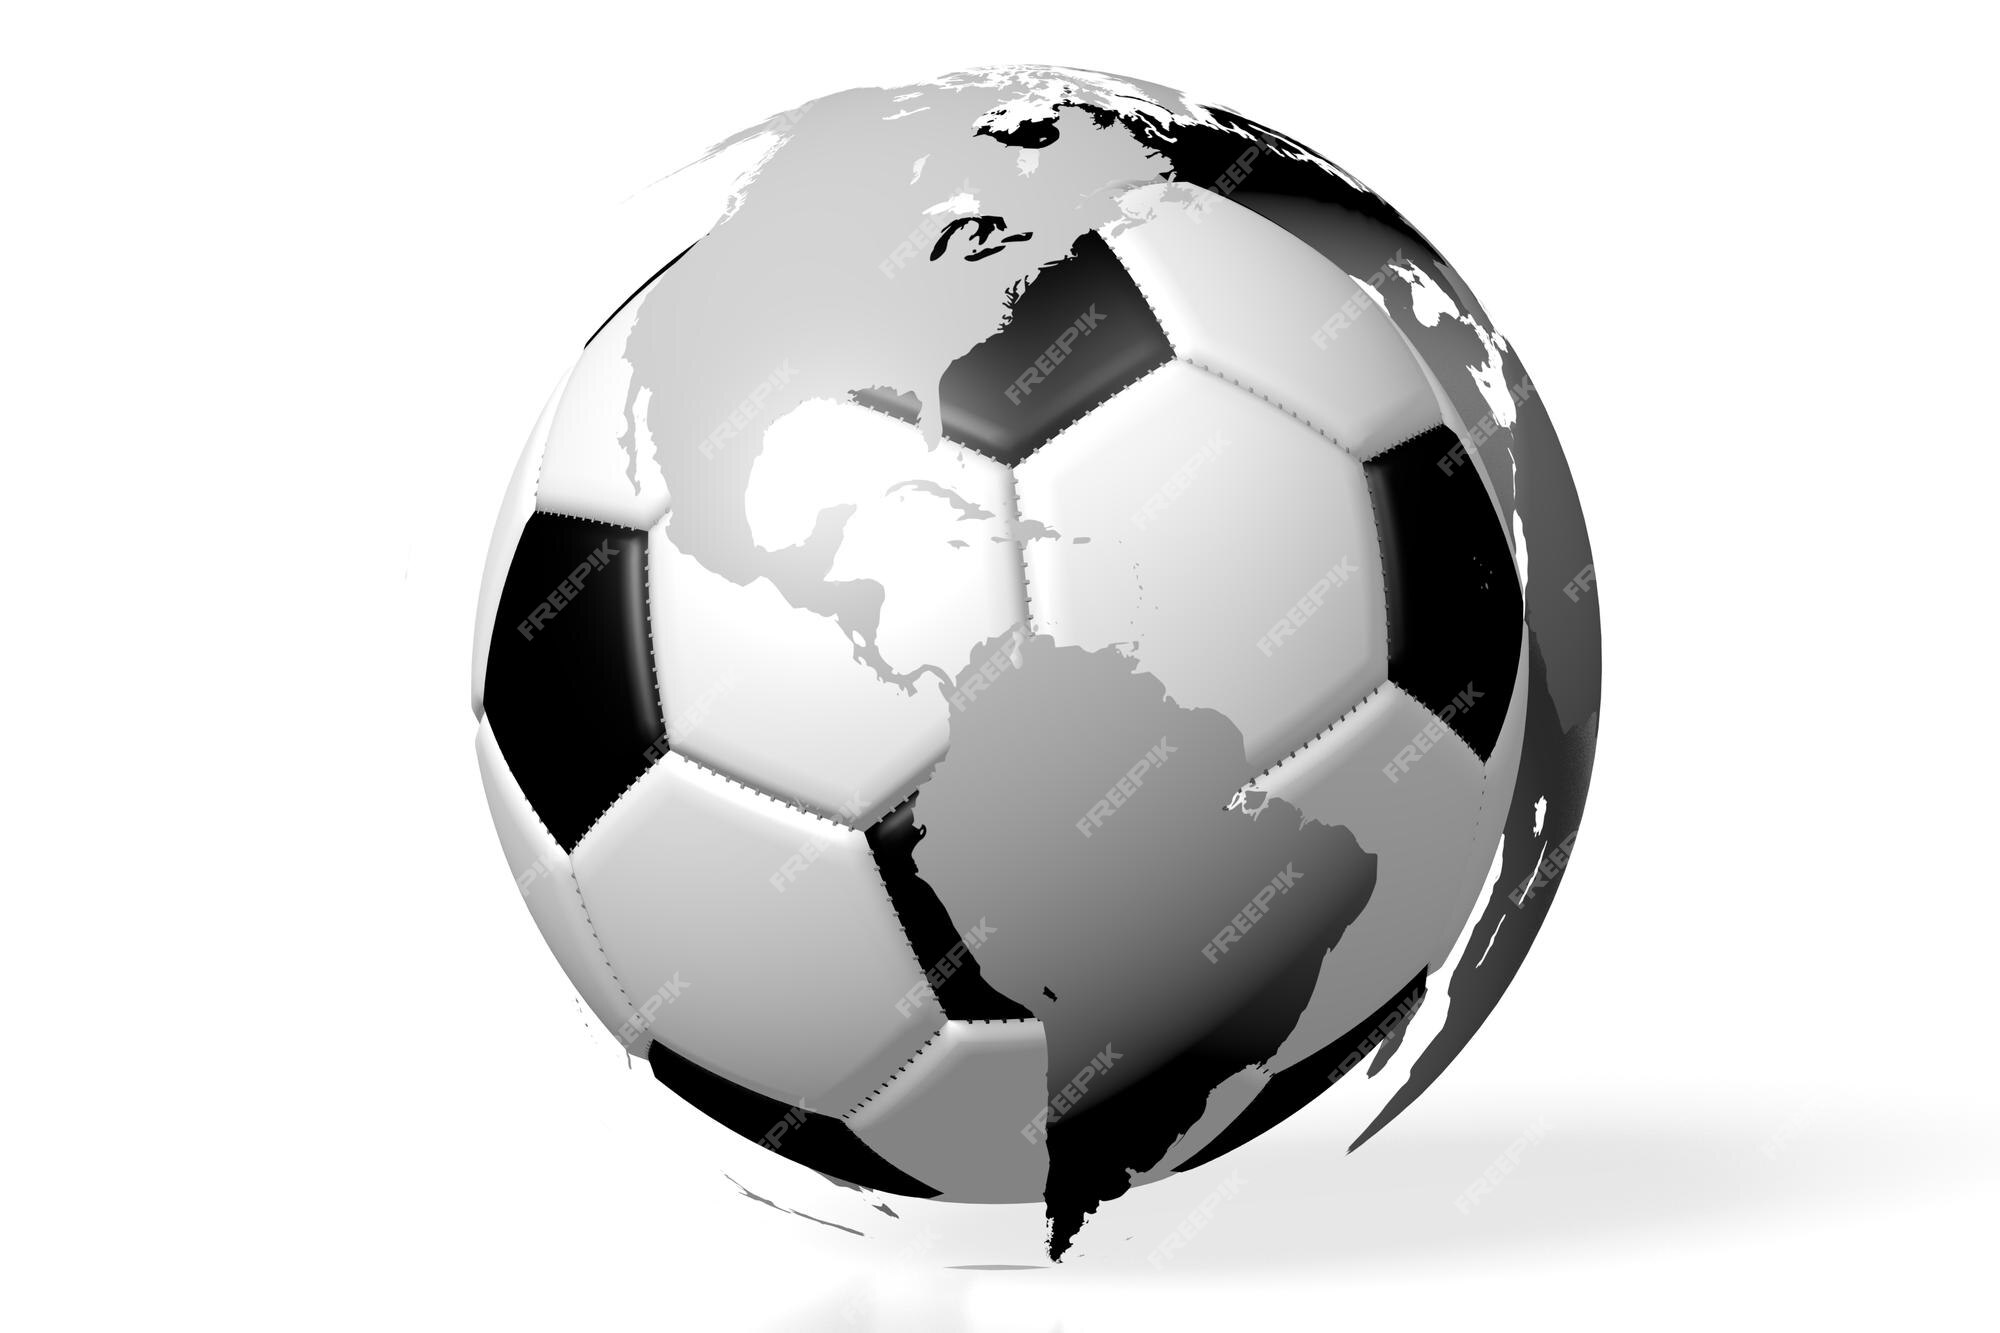 mapa-múndi de bola de futebol no fundo da tv 4607888 Vetor no Vecteezy